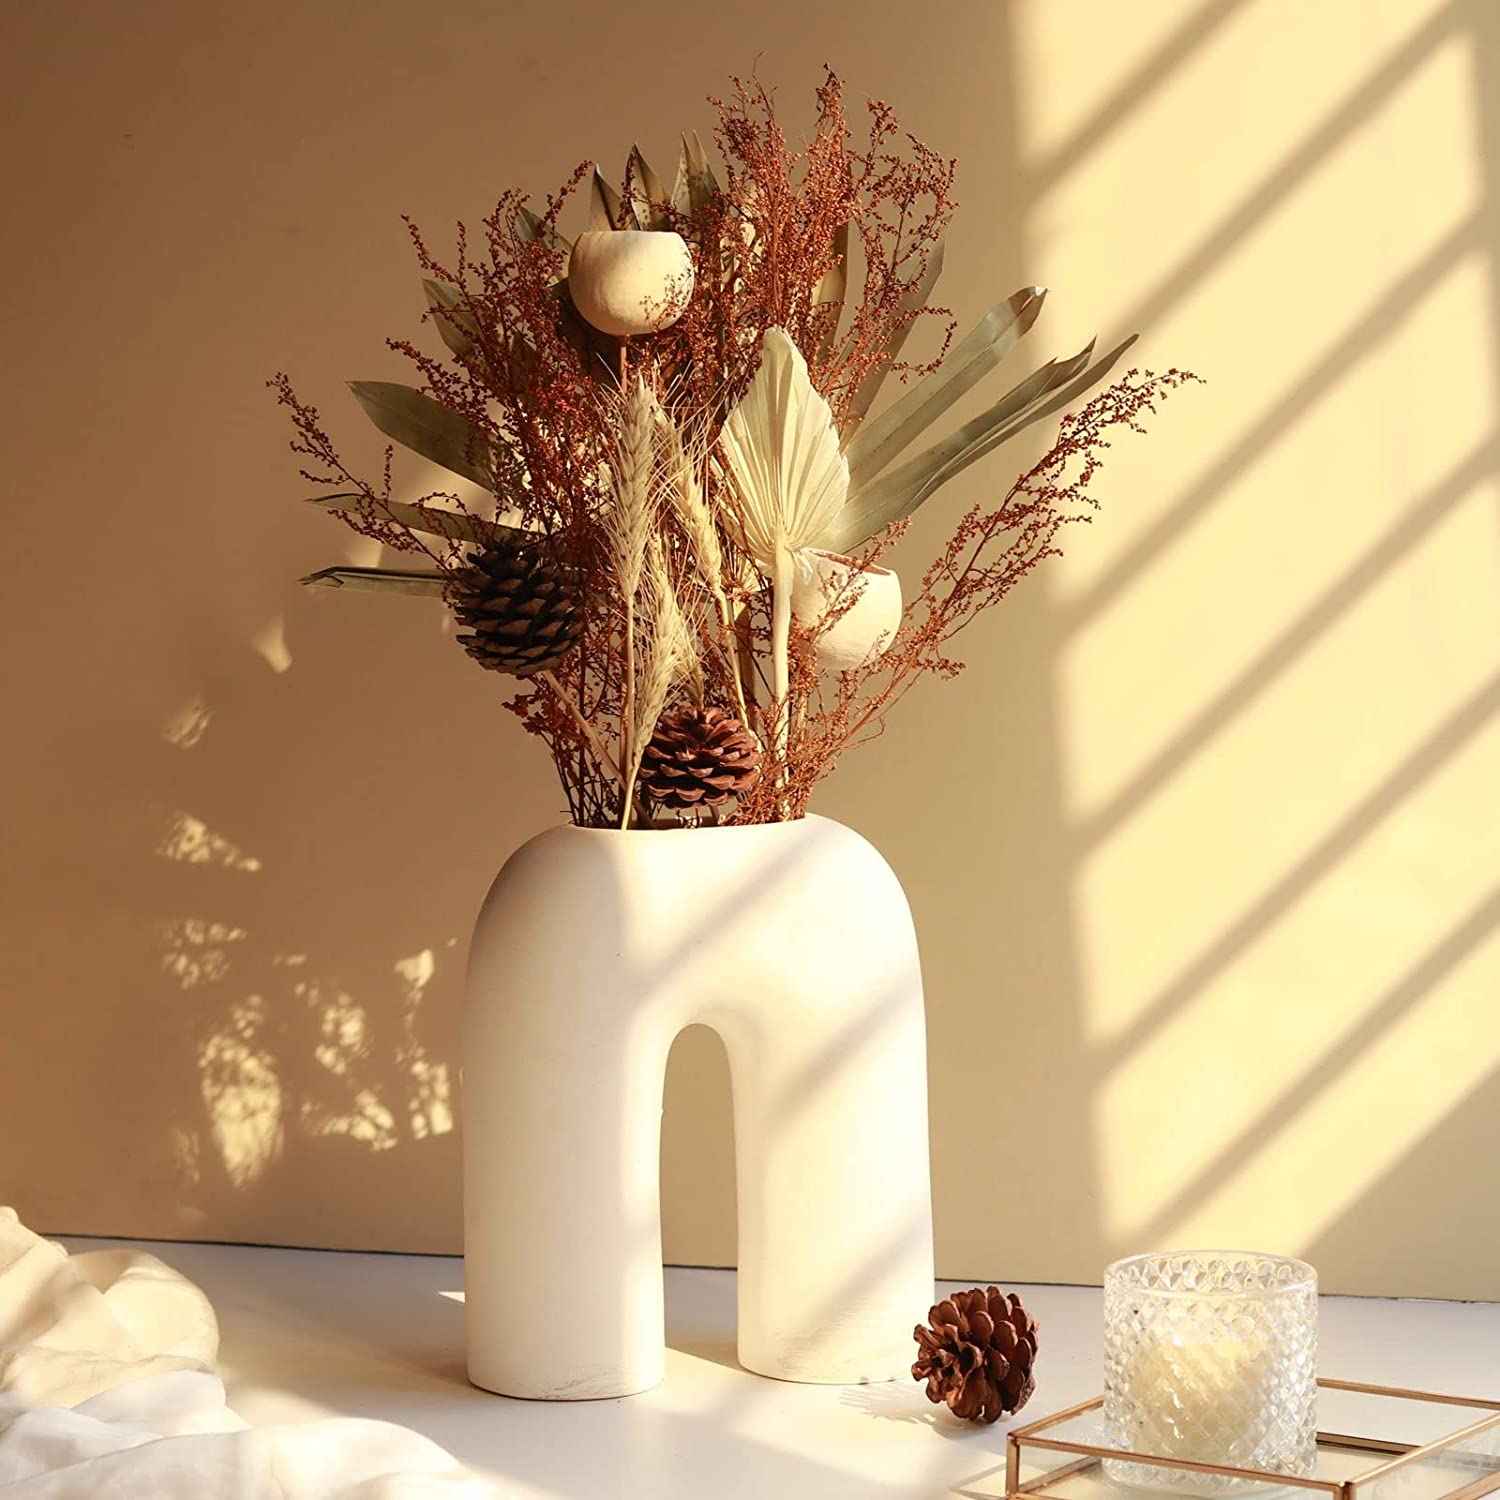 Inverted ‘U’ Vase (White)